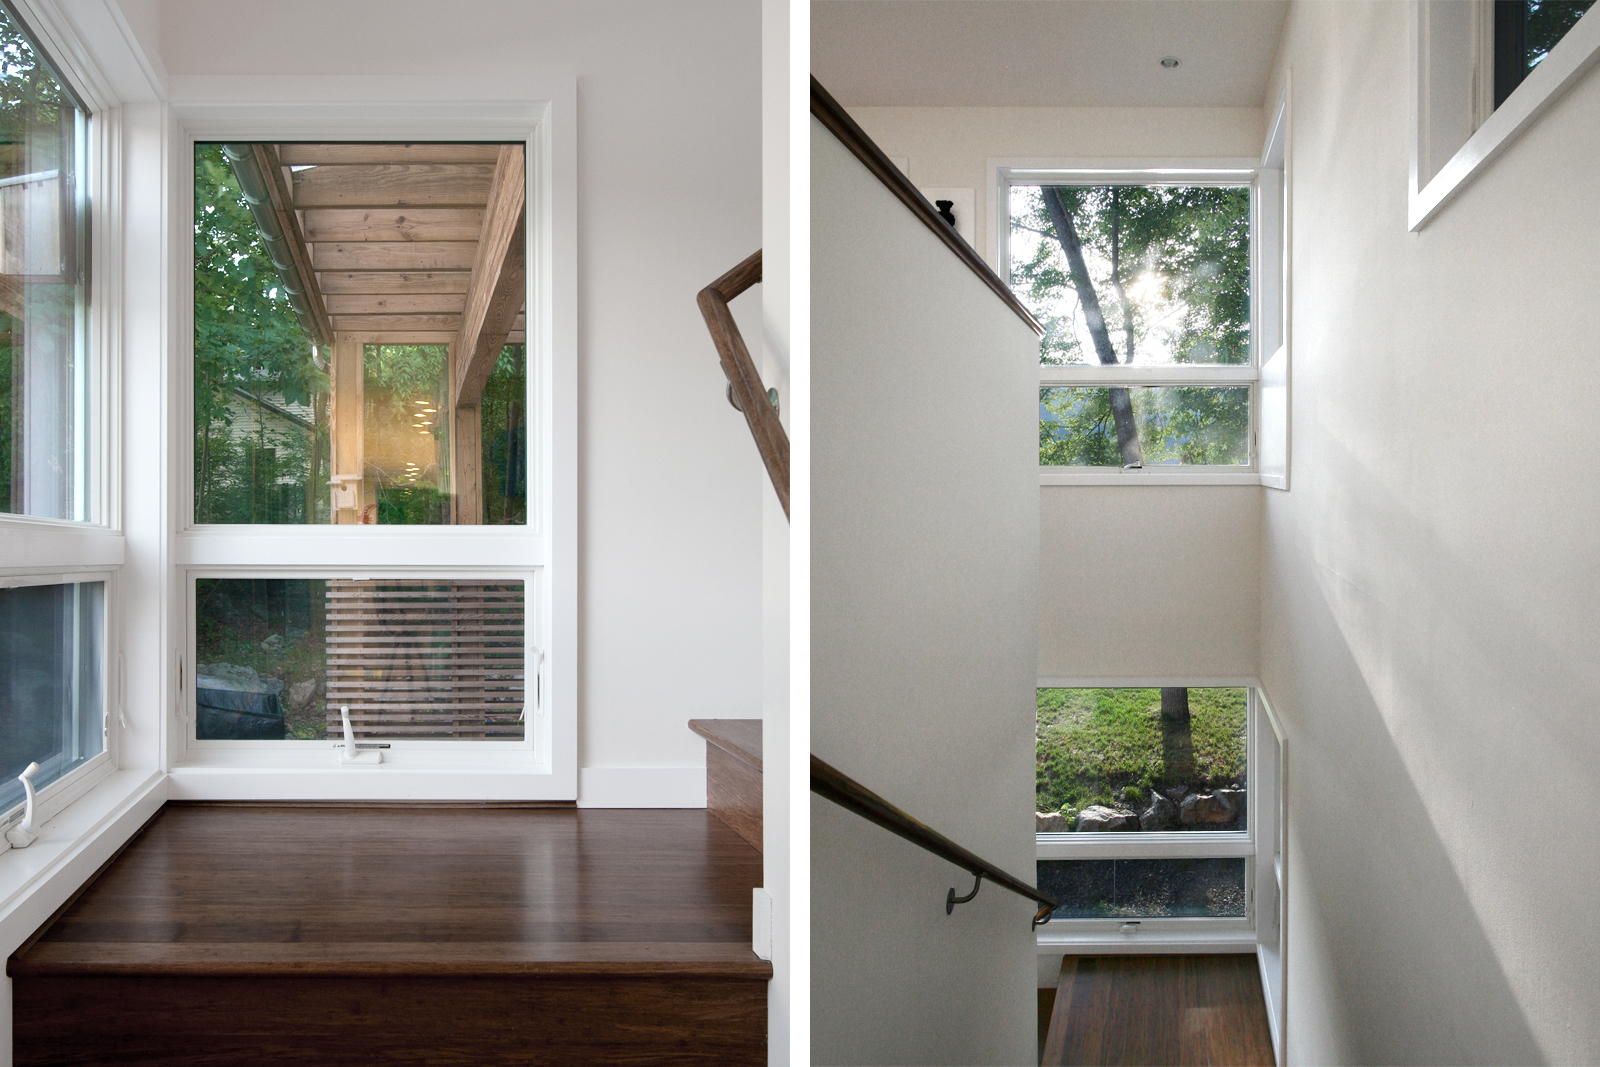 10-res4-resolution-4-architecture-modern-modular-home-prefab-house-lake-iosco-interior-stairs.jpg